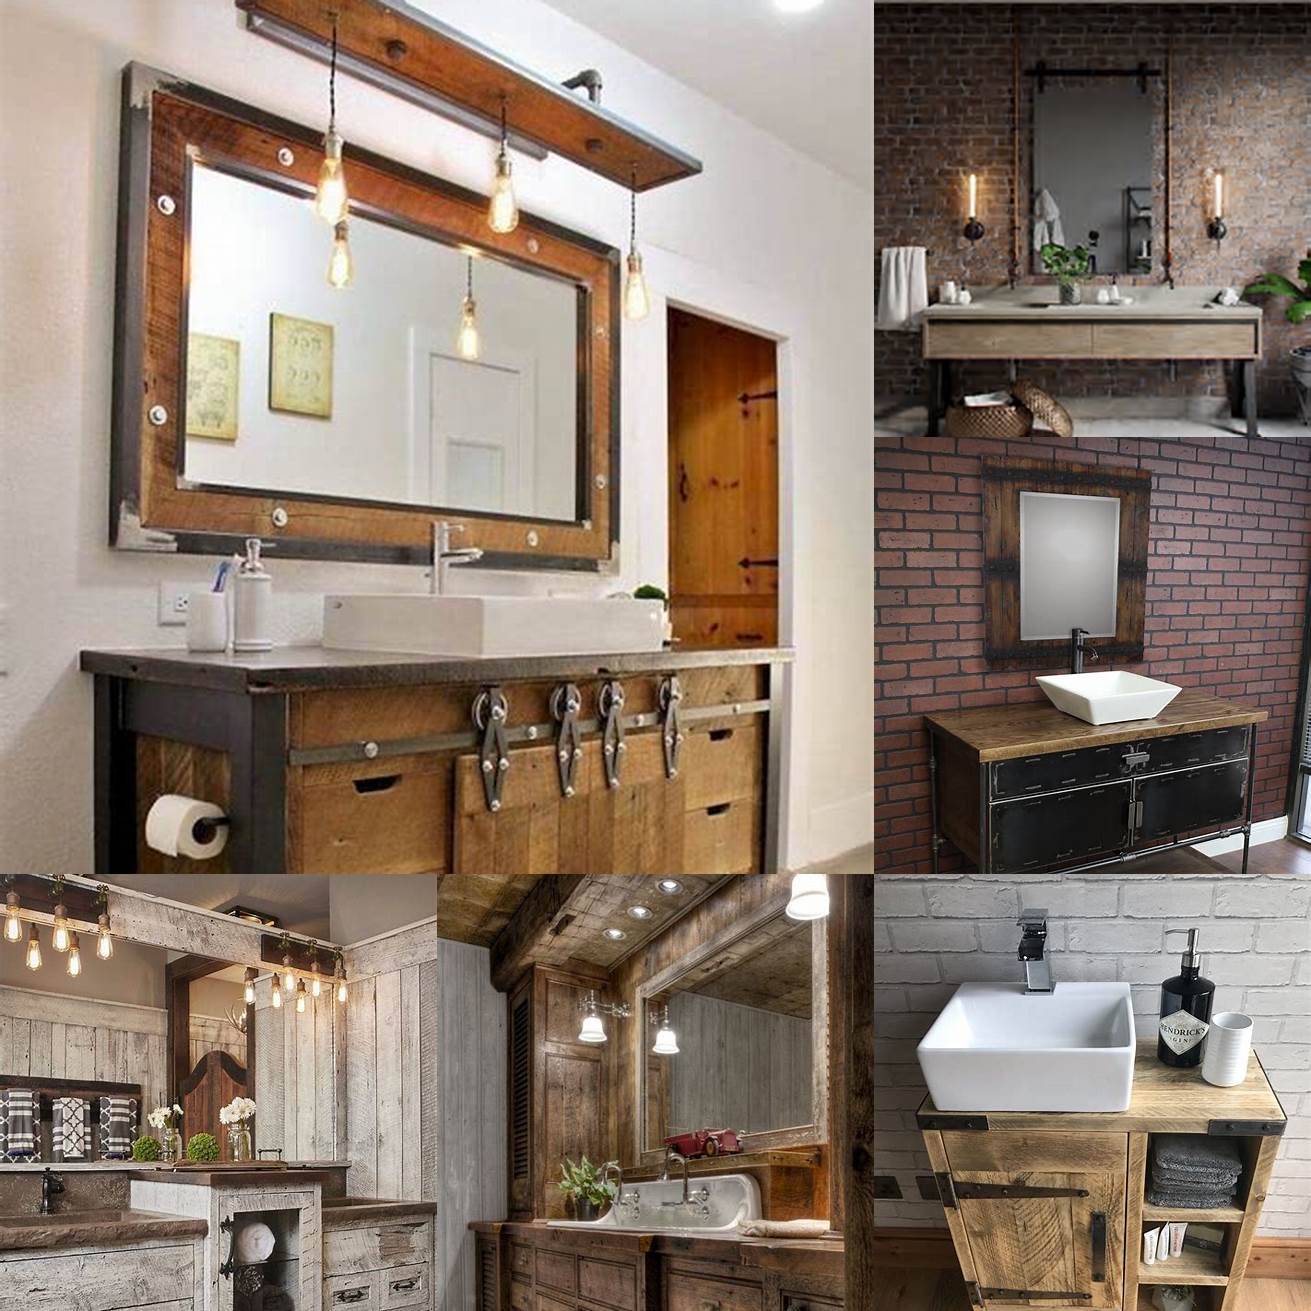 A rustic metal bathroom vanity can add an industrial look to your bathroom